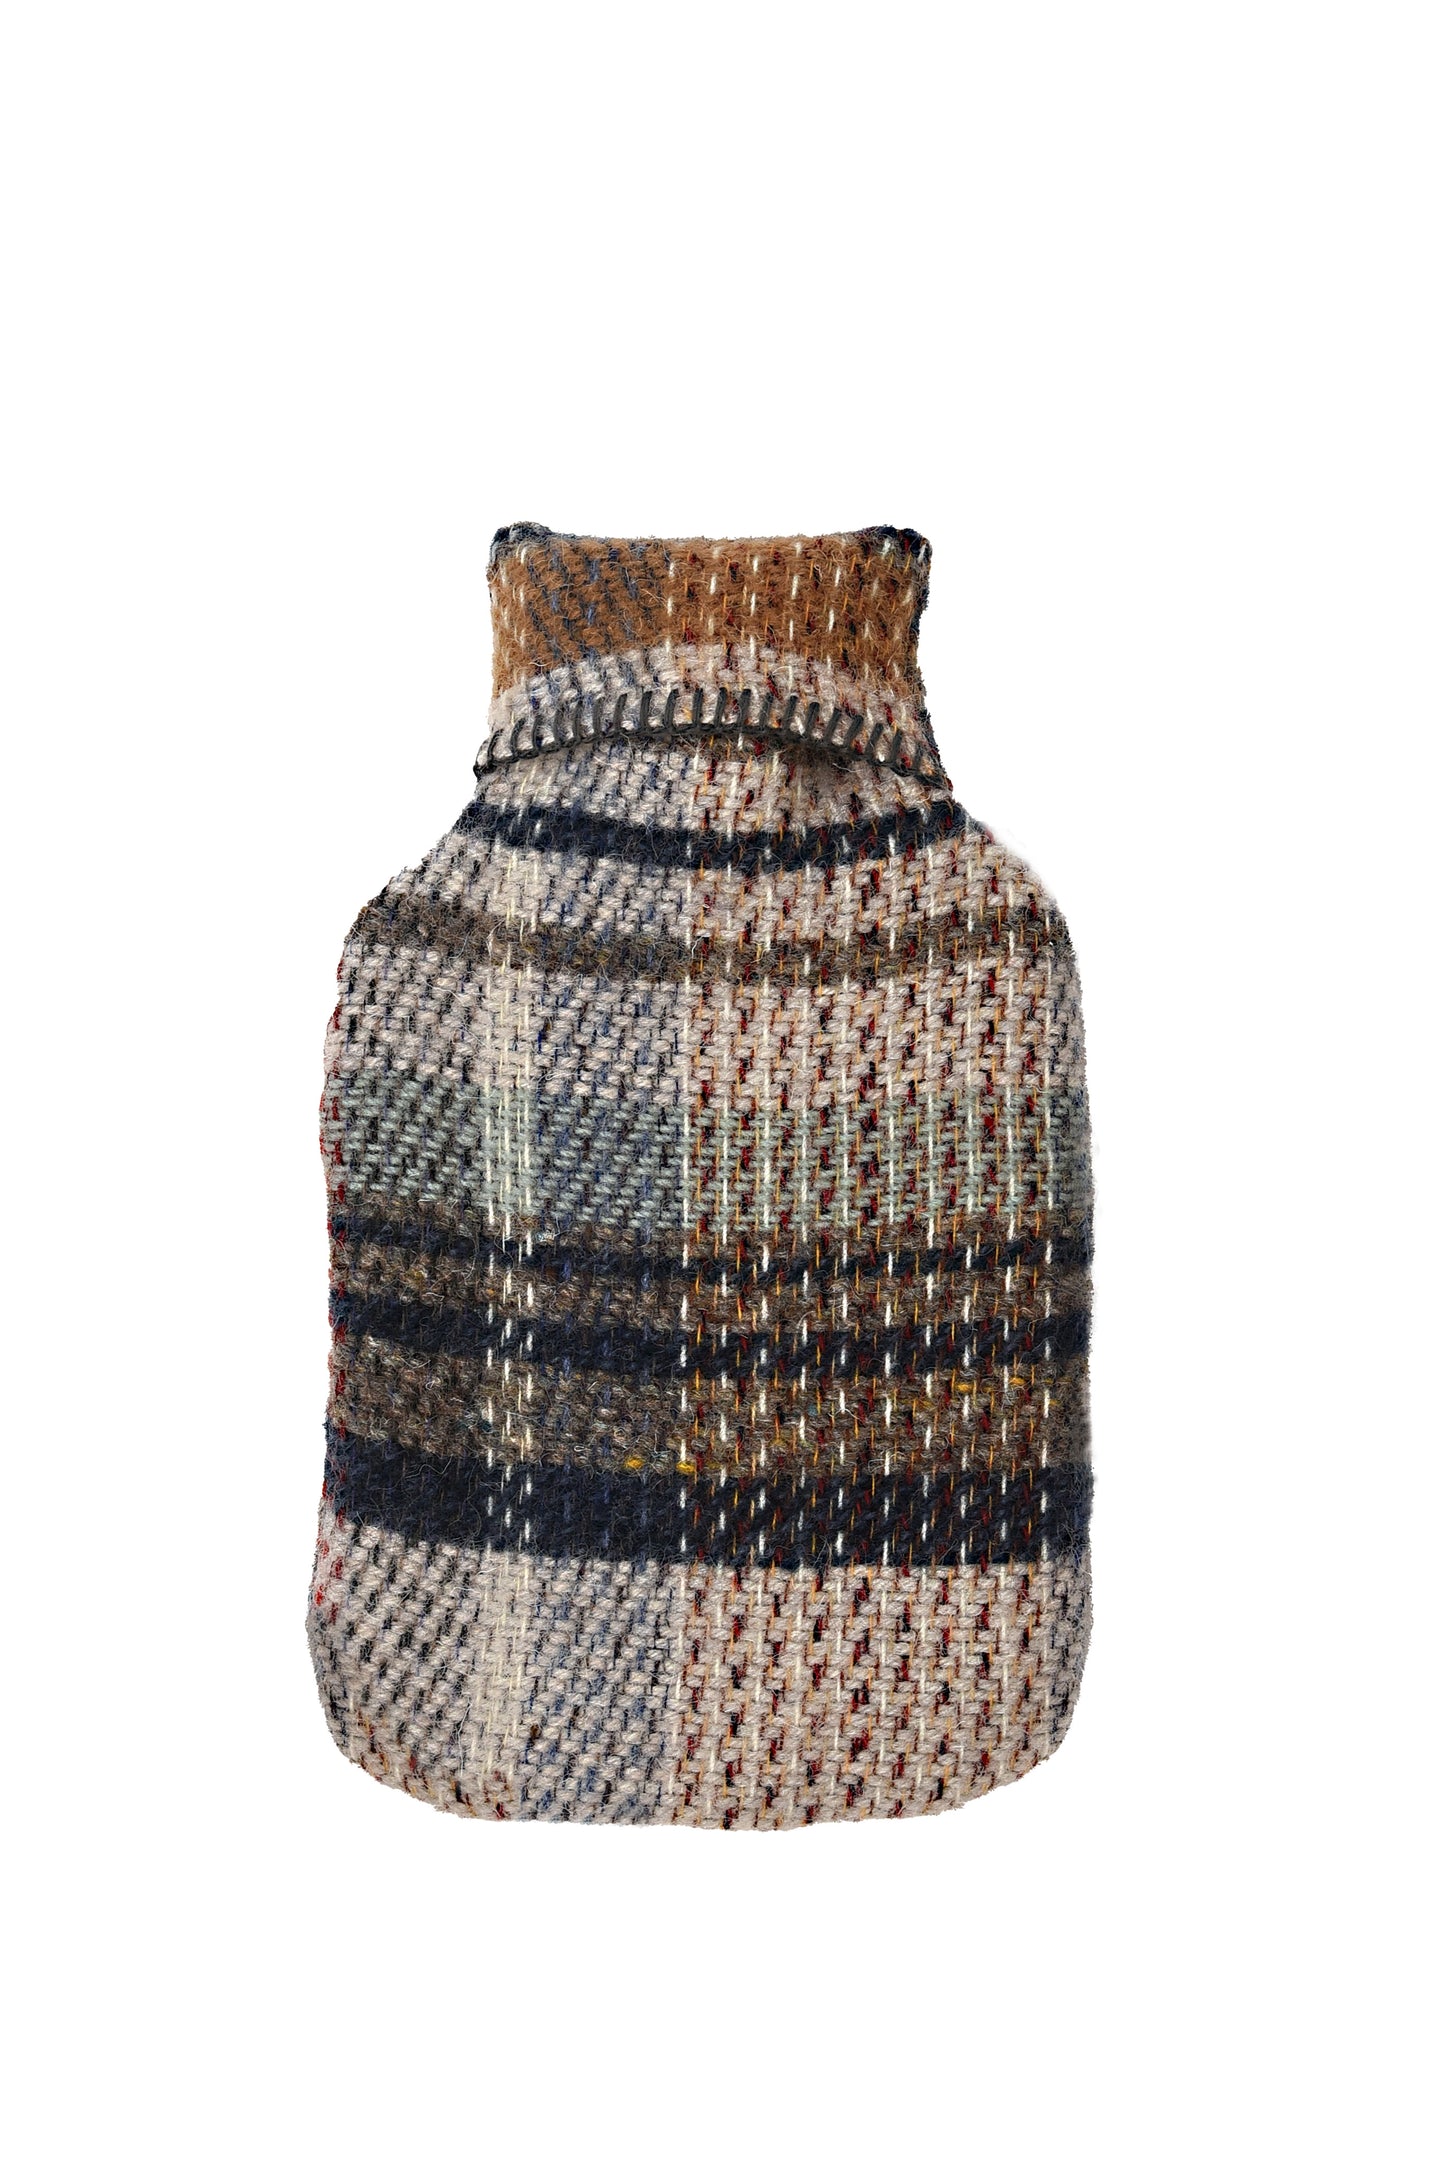 Tweedmill Recycled Wool Hot Water Bottle in Diagonal Stripe in Latte